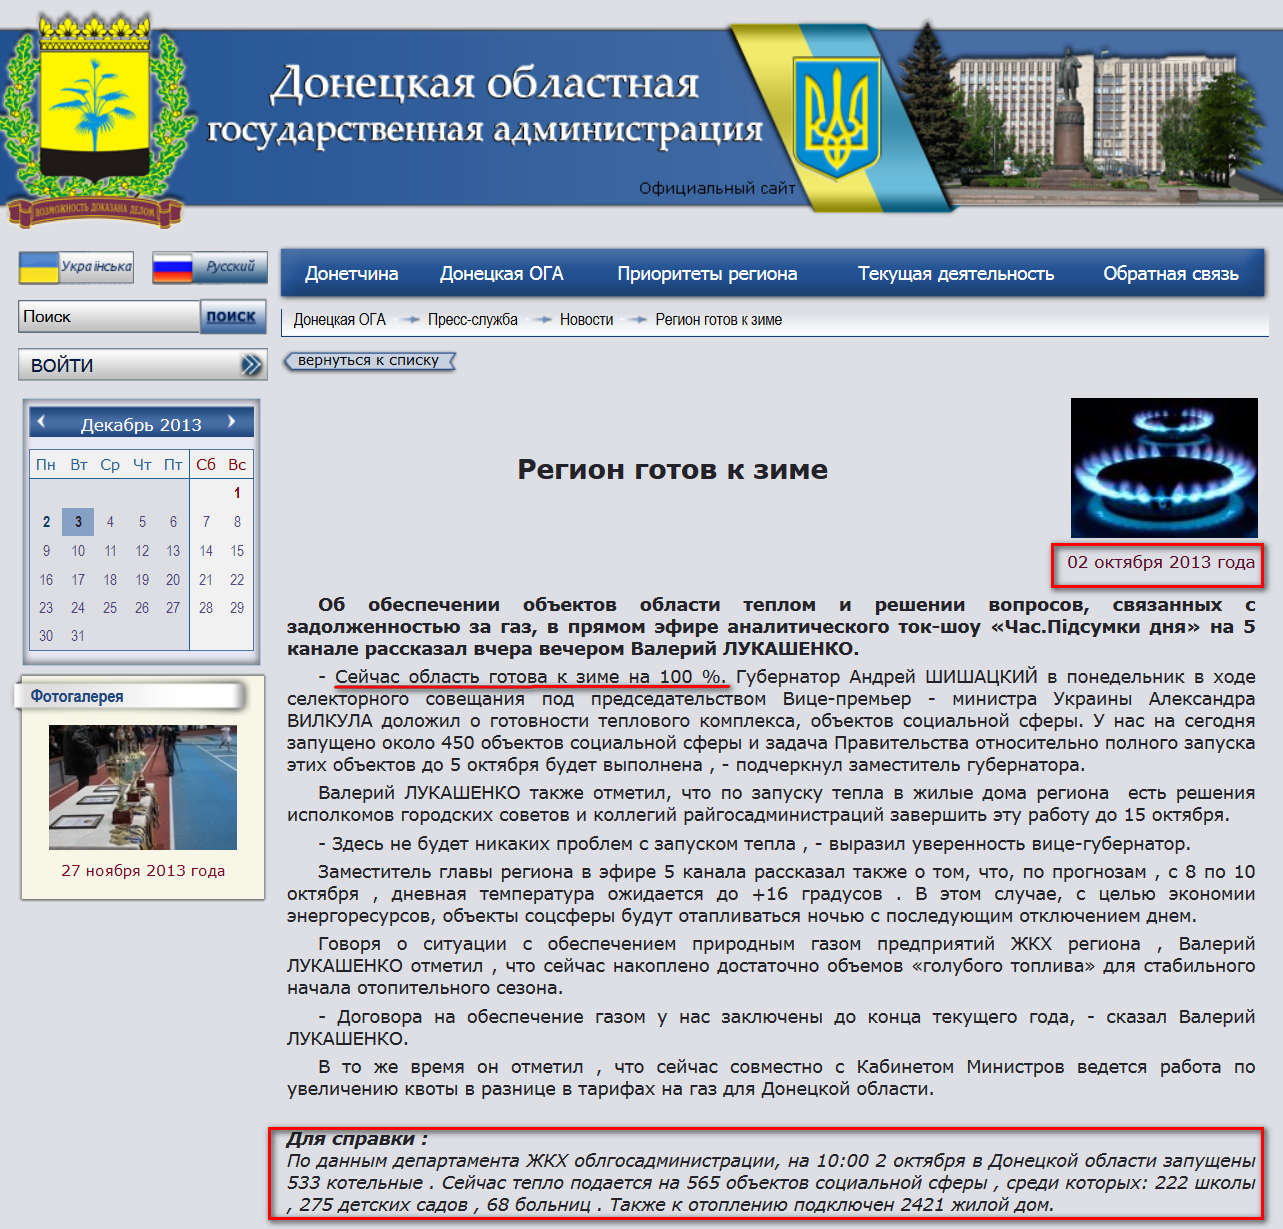 http://donoda.gov.ua/?lang=ru&sec=02.03.09&iface=Public&cmd=view&args=id:12273